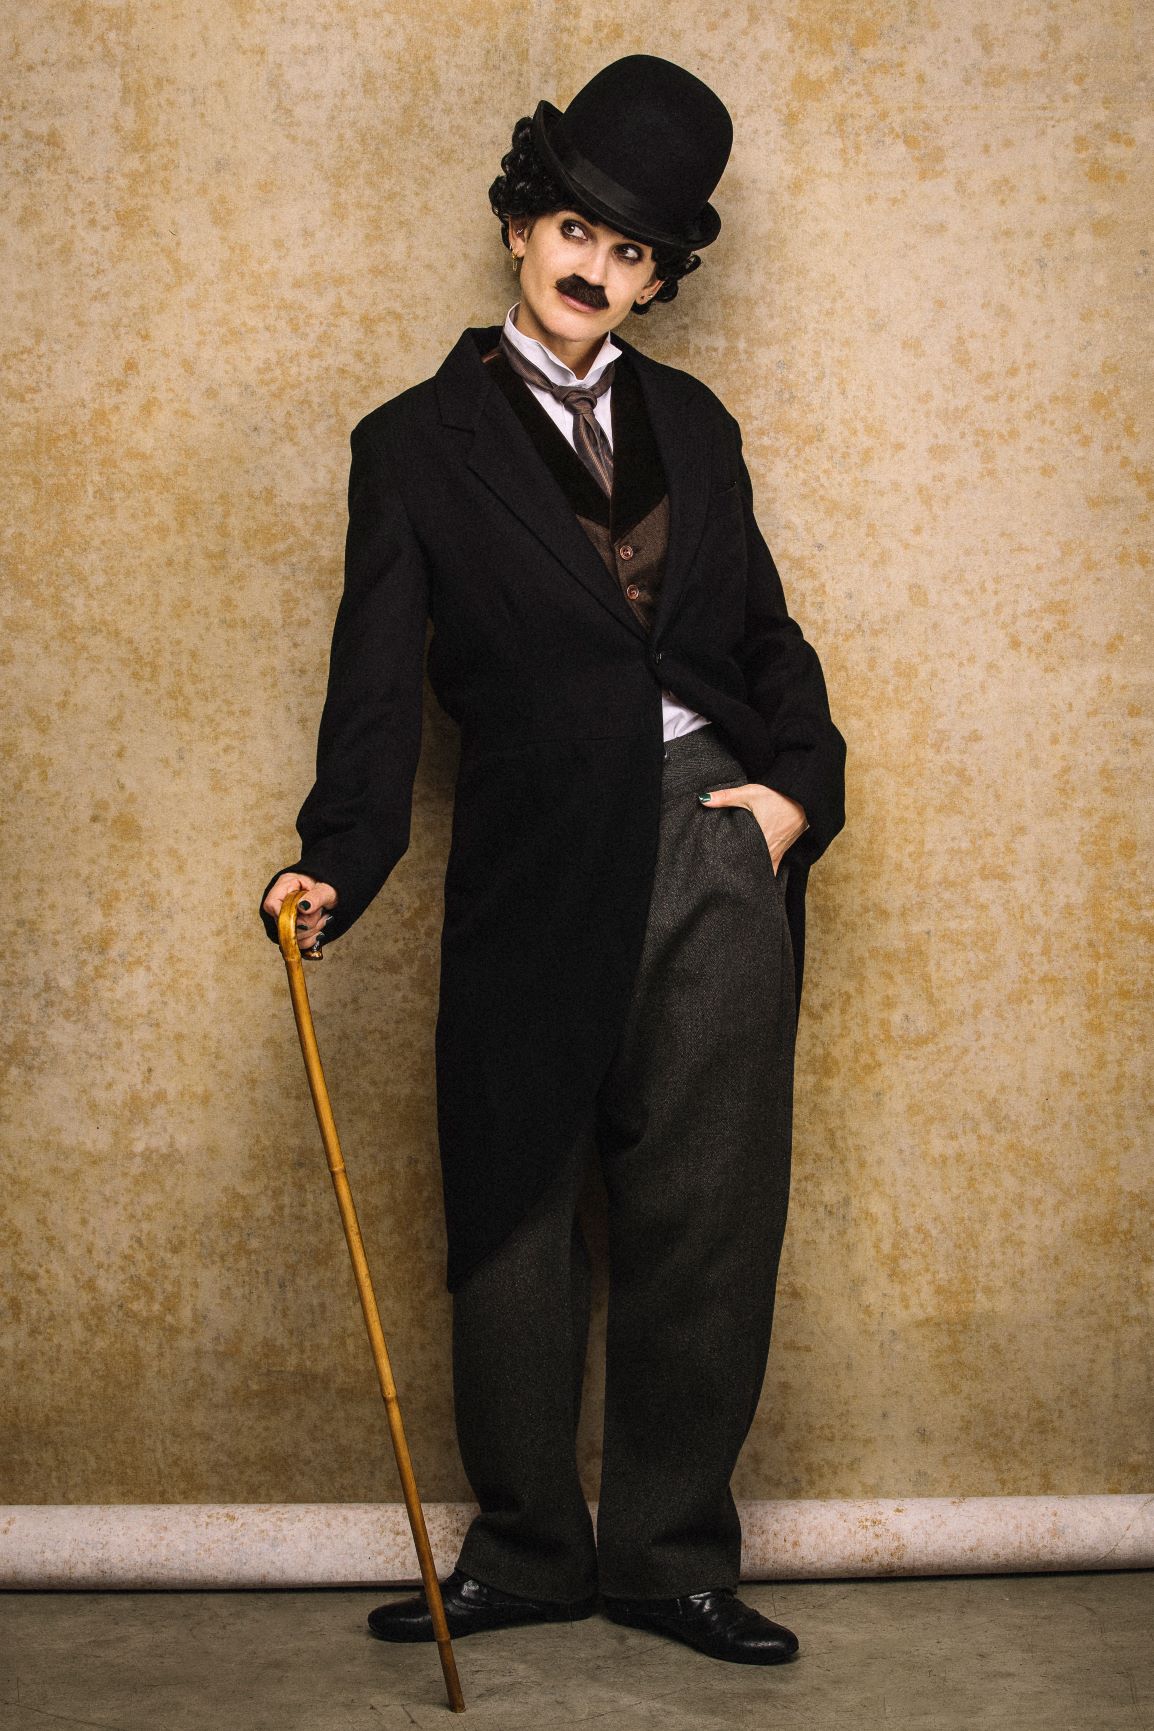 Ashley Roberts as Charlie Chaplin 